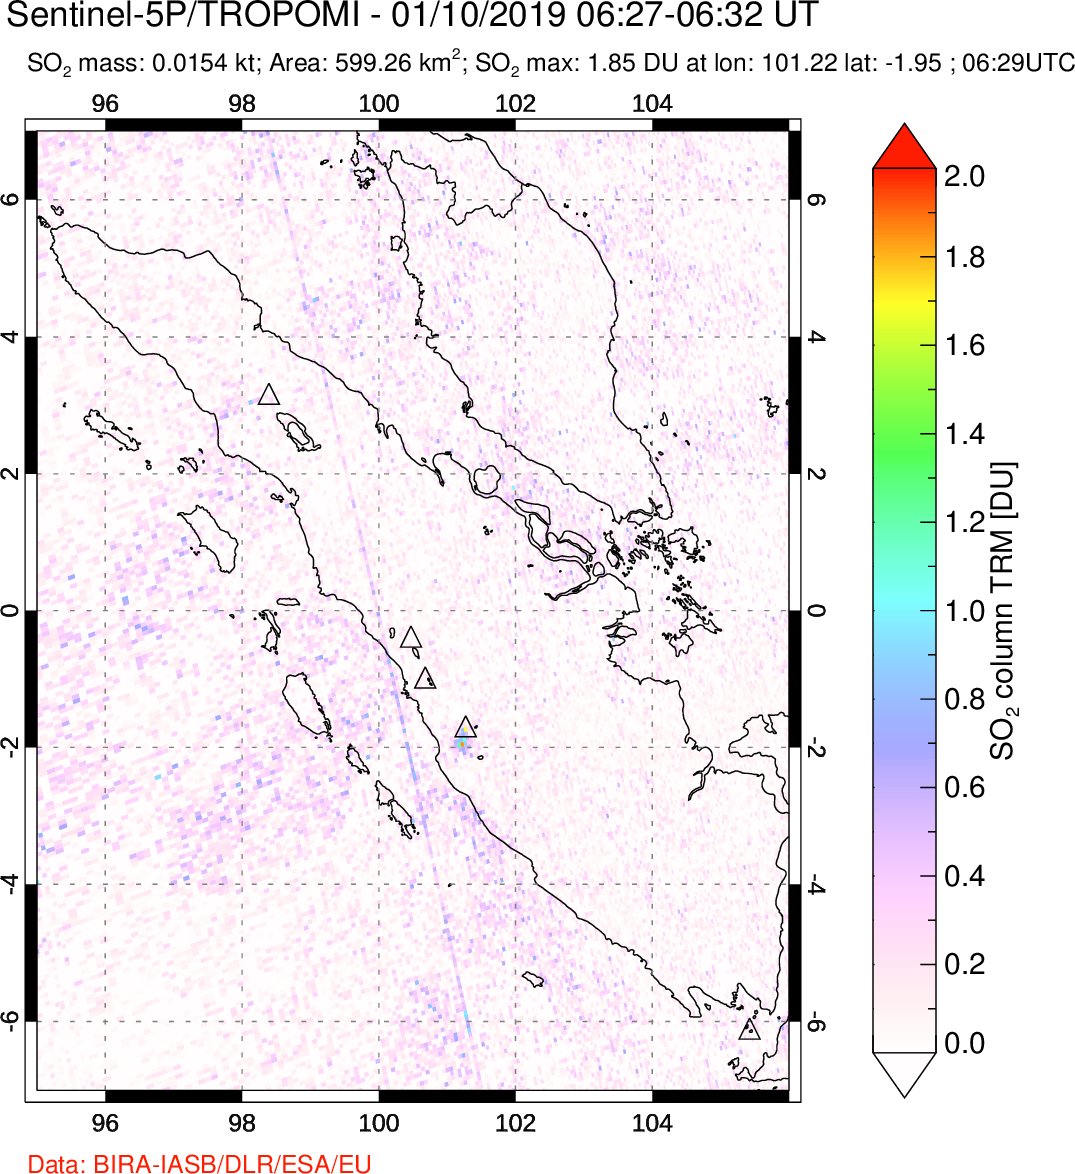 A sulfur dioxide image over Sumatra, Indonesia on Jan 10, 2019.